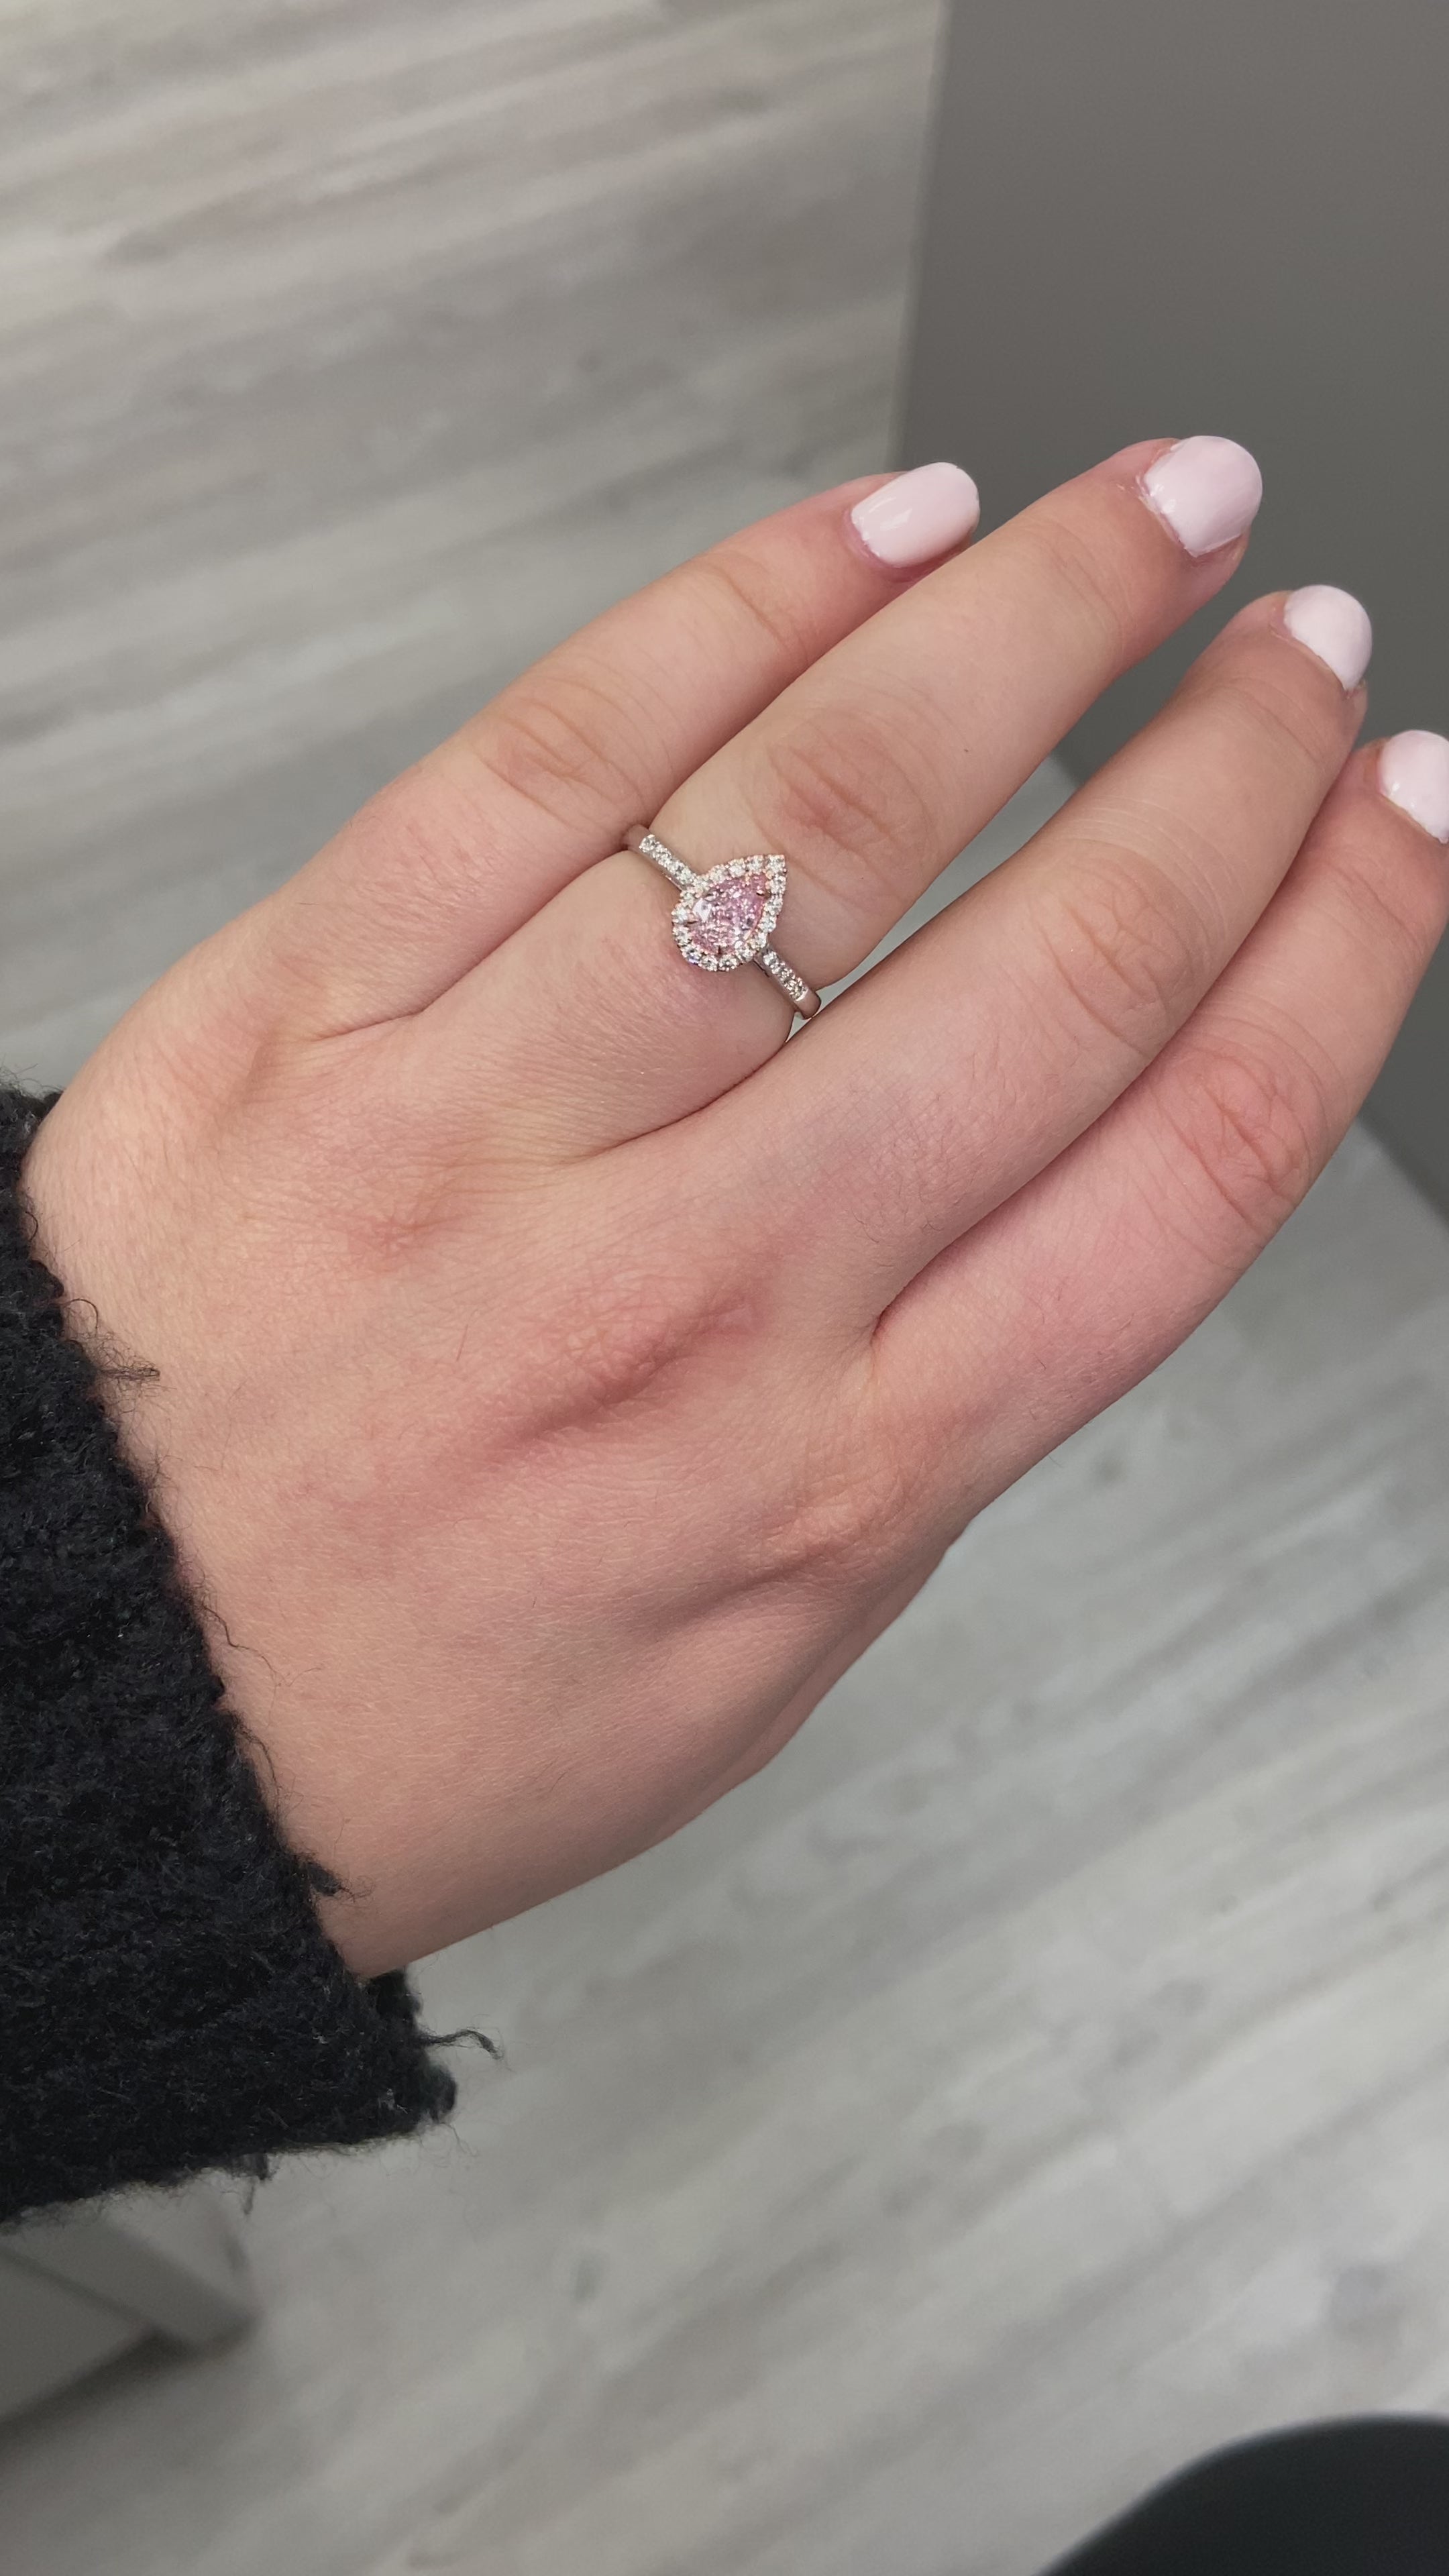 Pink diamond: 3ct simulated light pink diamond rings 925 silver, women's  gift | eBay